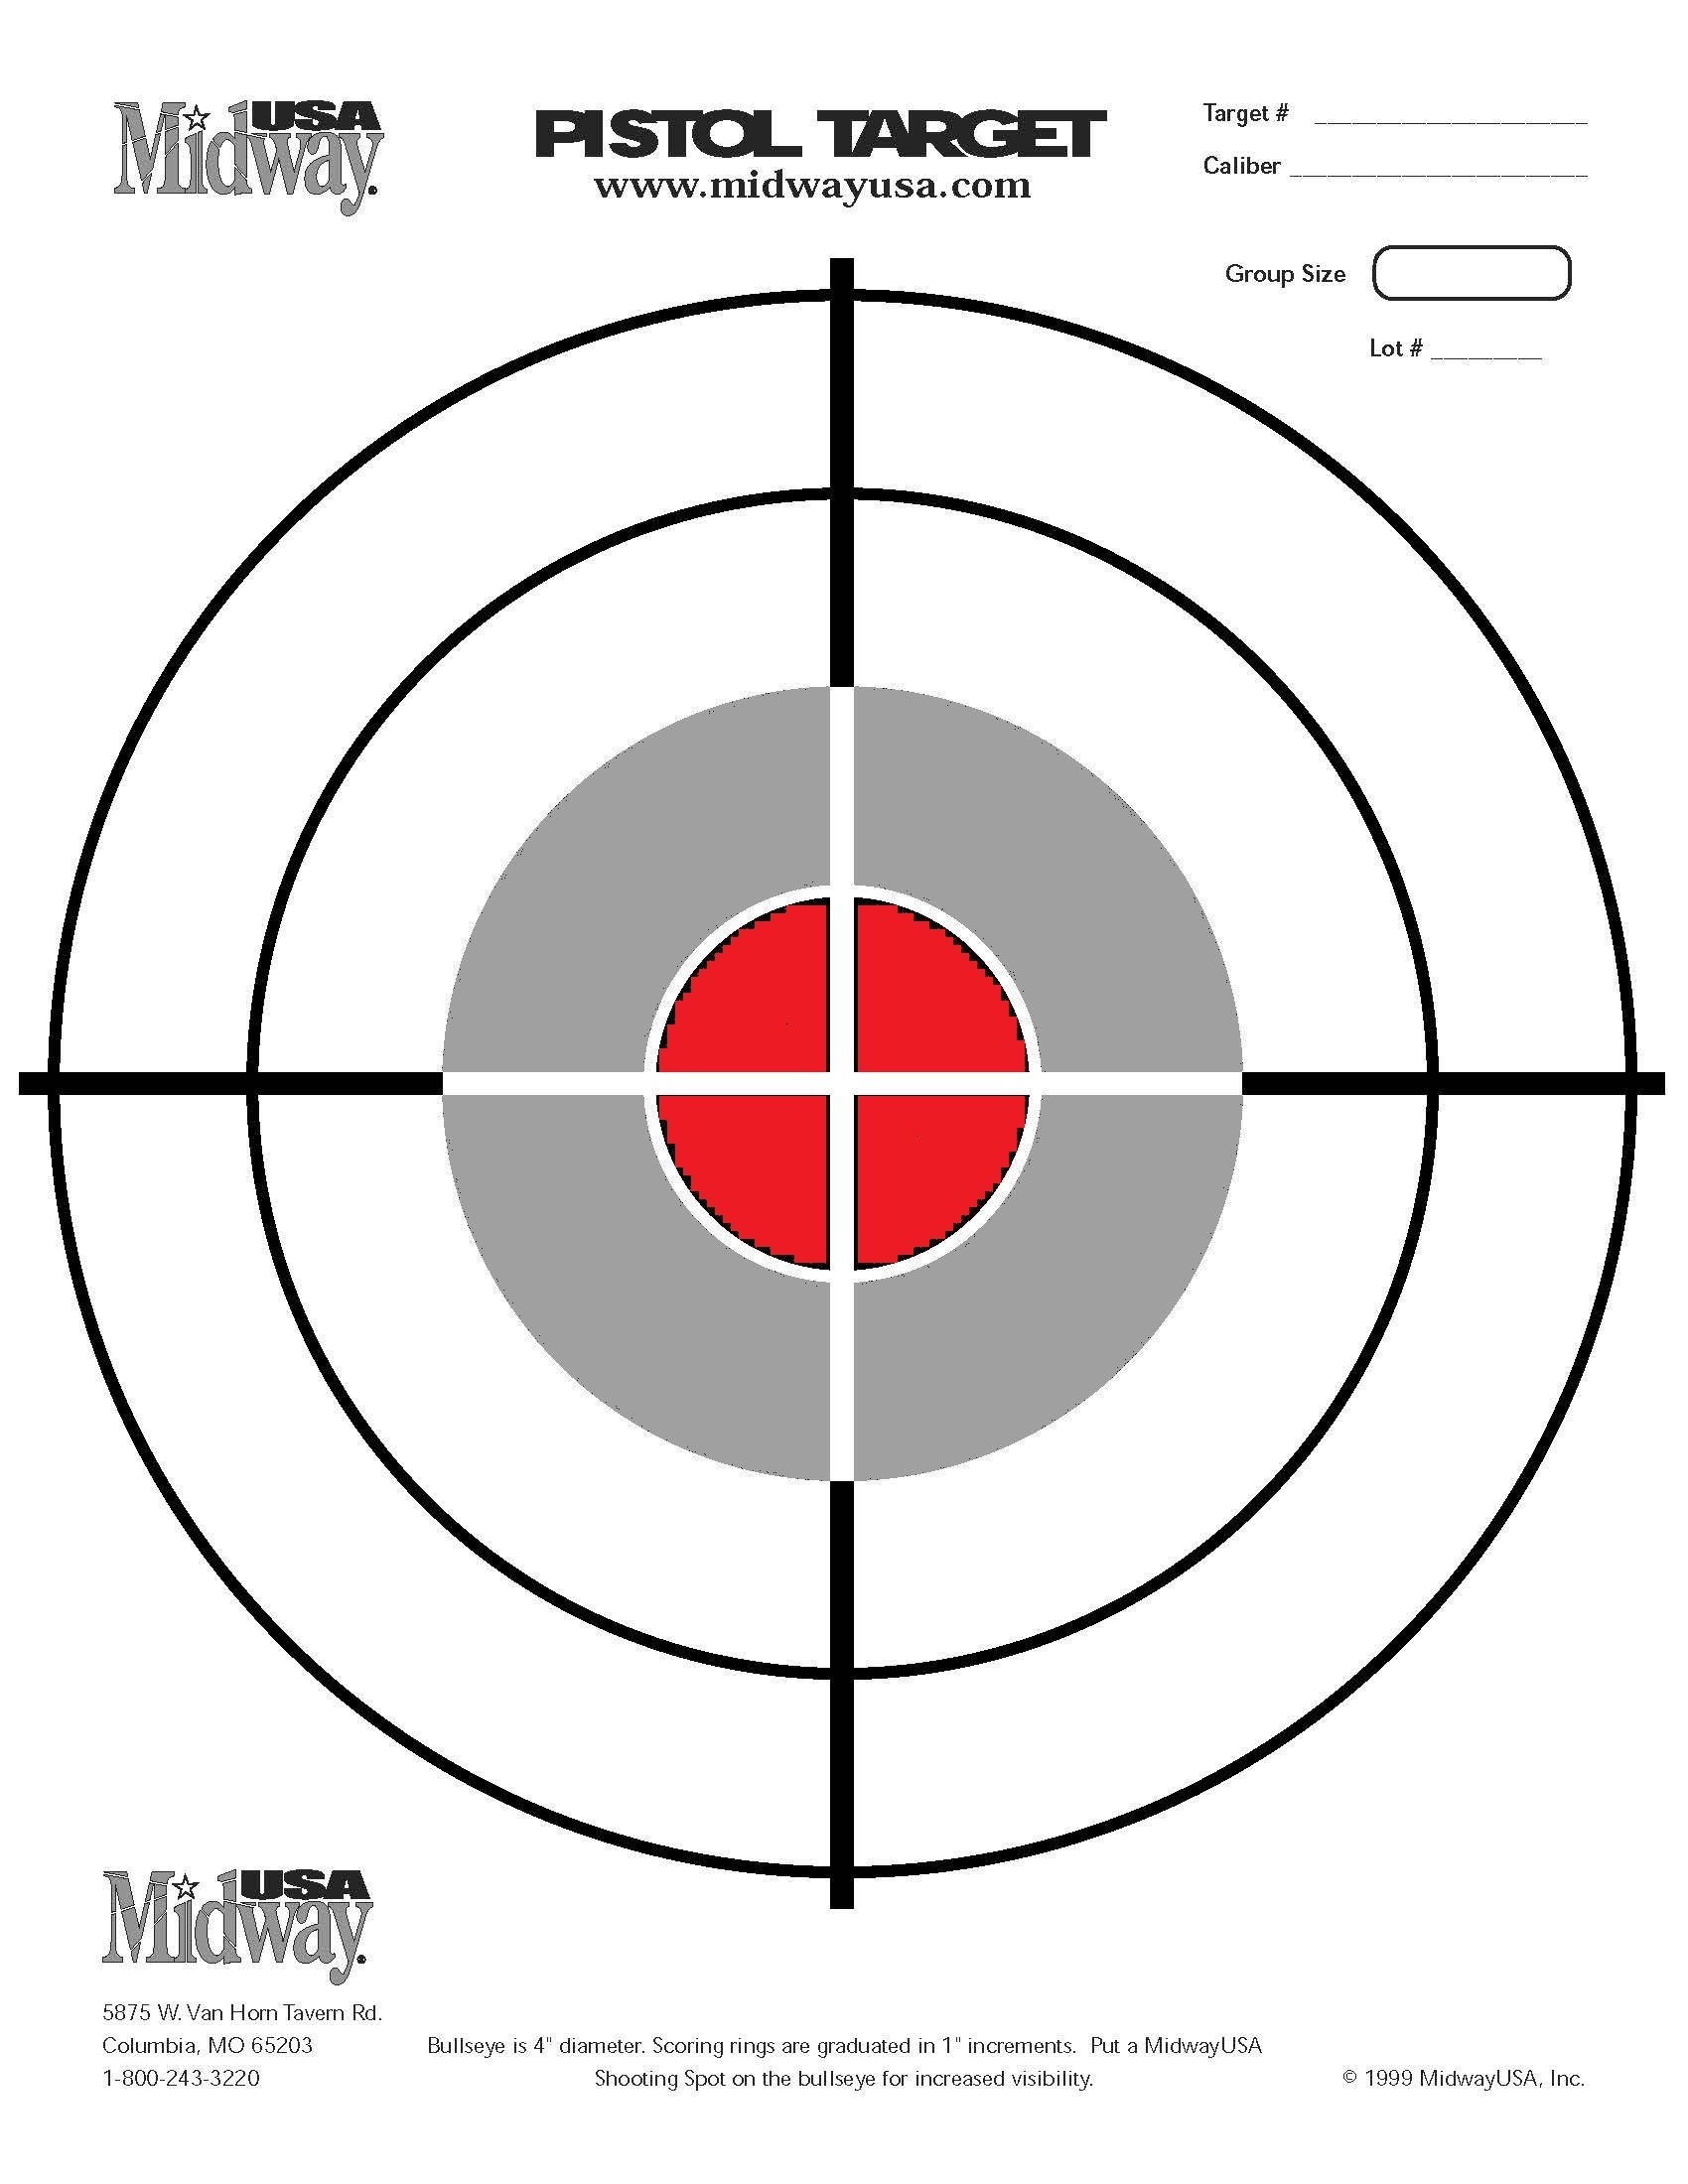 60 Fun Printable Targets | Kittybabylove - Free Printable Targets For Shooting Practice